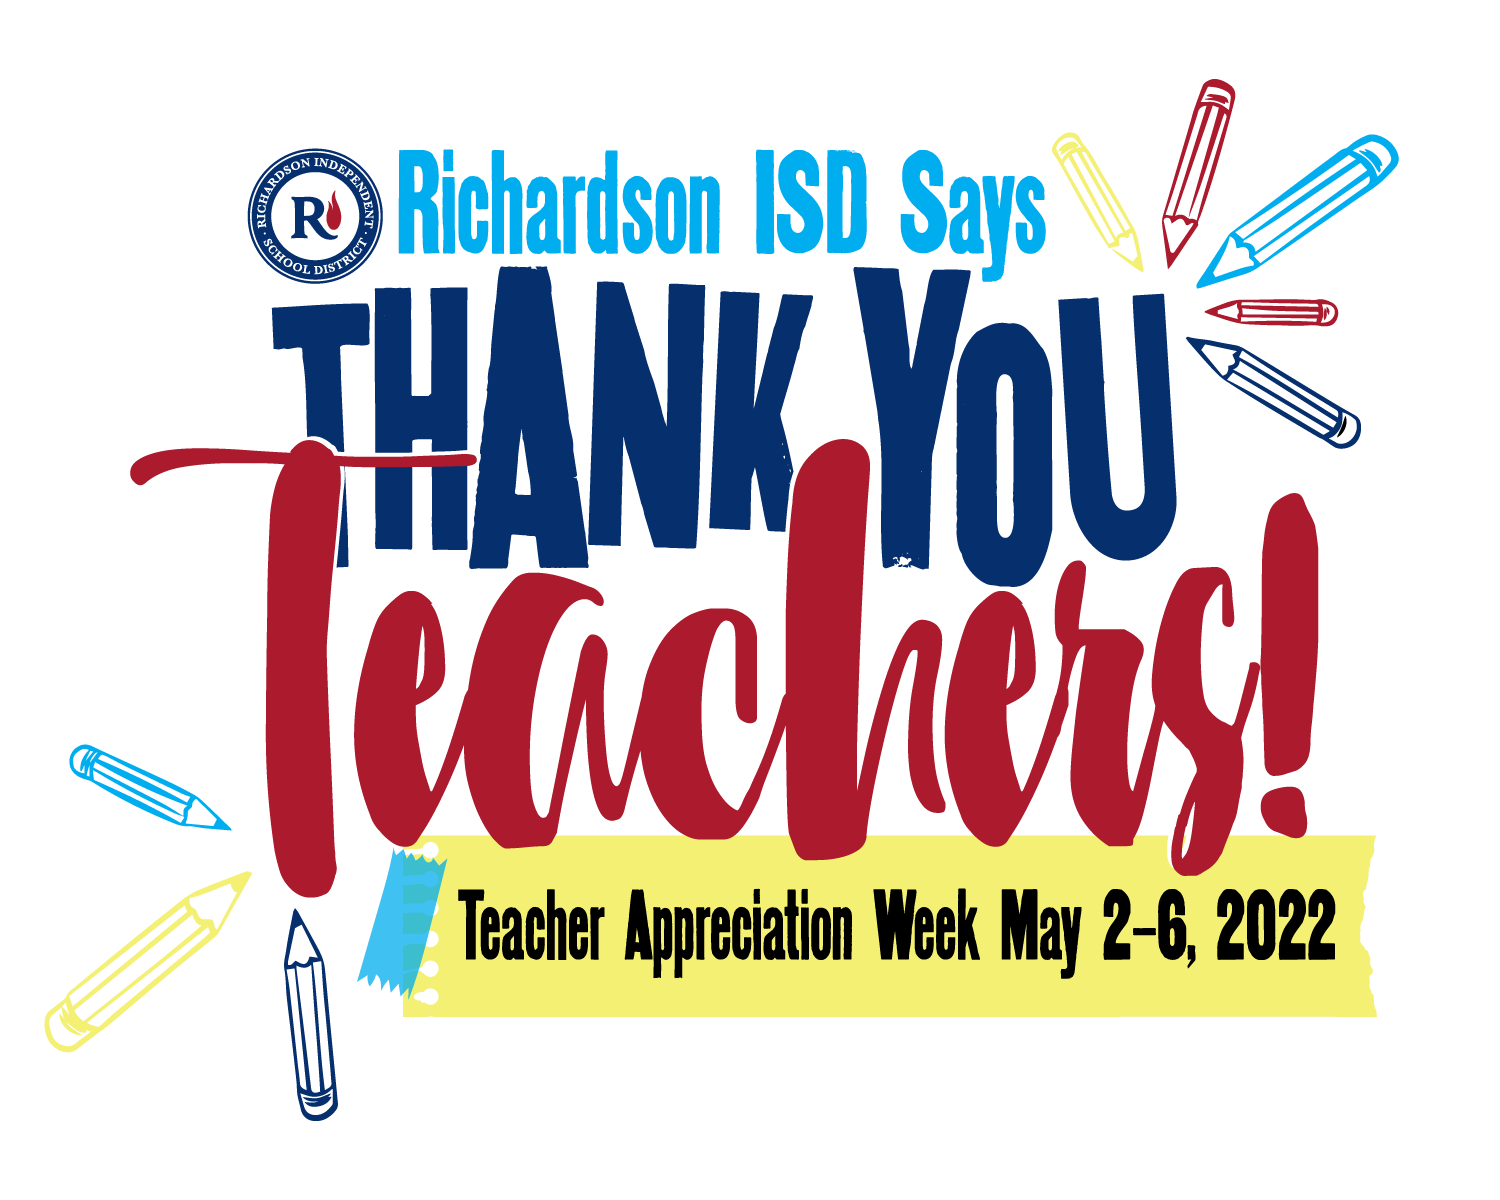 Teacher thank you graphic for teacher appreciation week, May 2-6